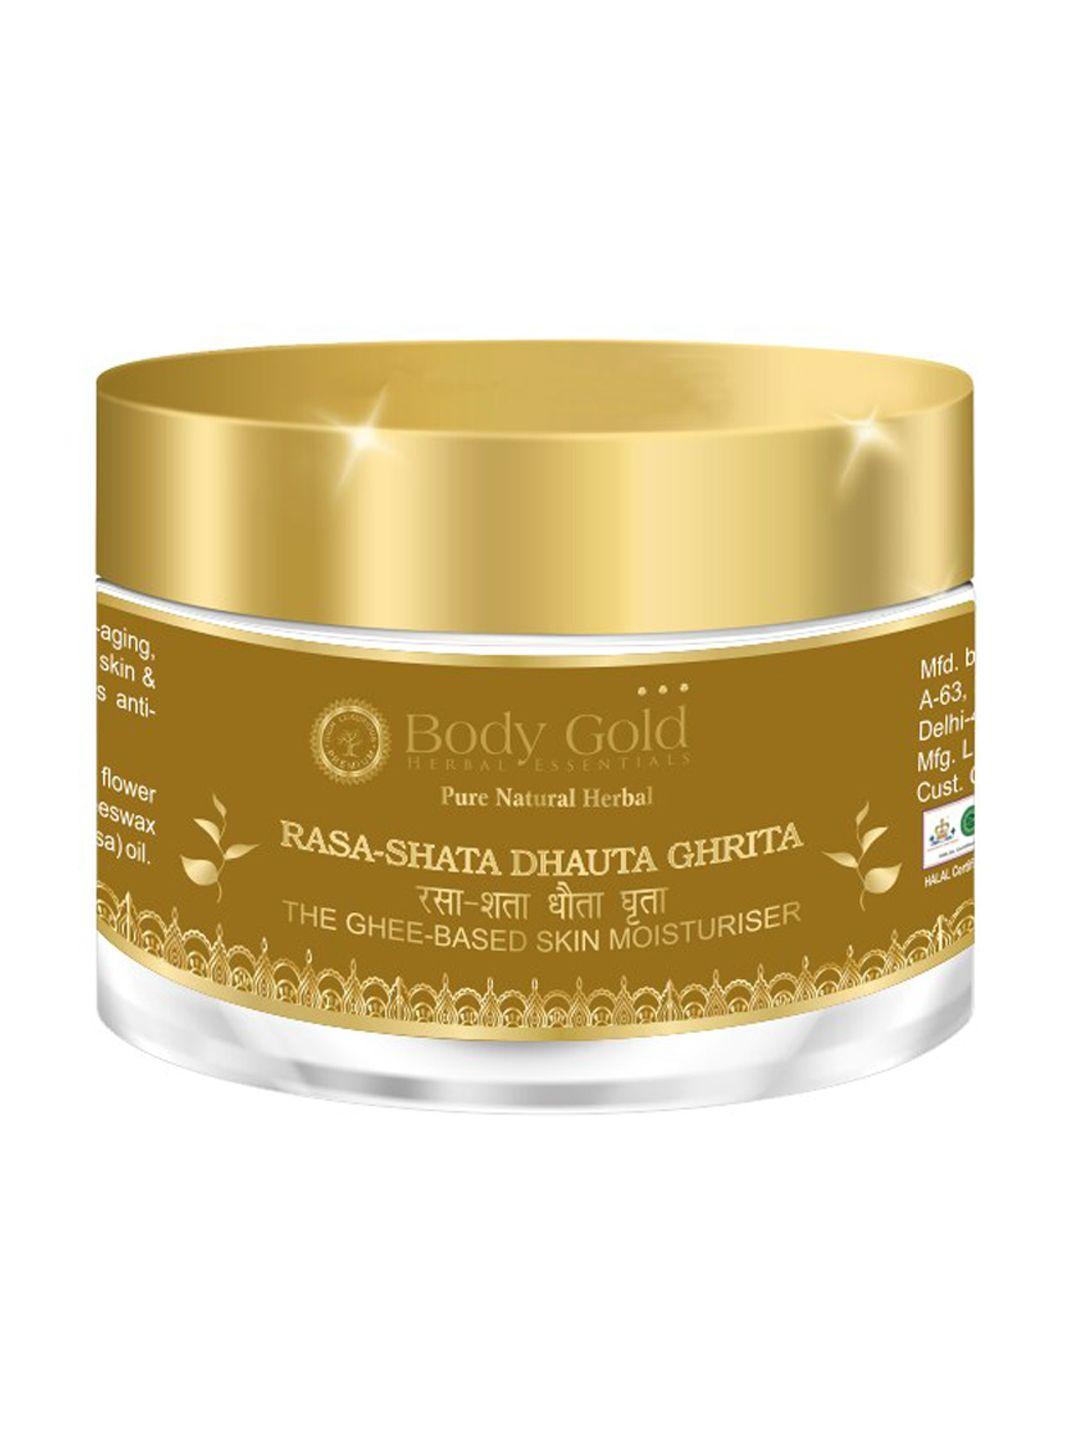 body gold rasa shata dhauta ghrita - the ghee based skin moisturiser 50 g